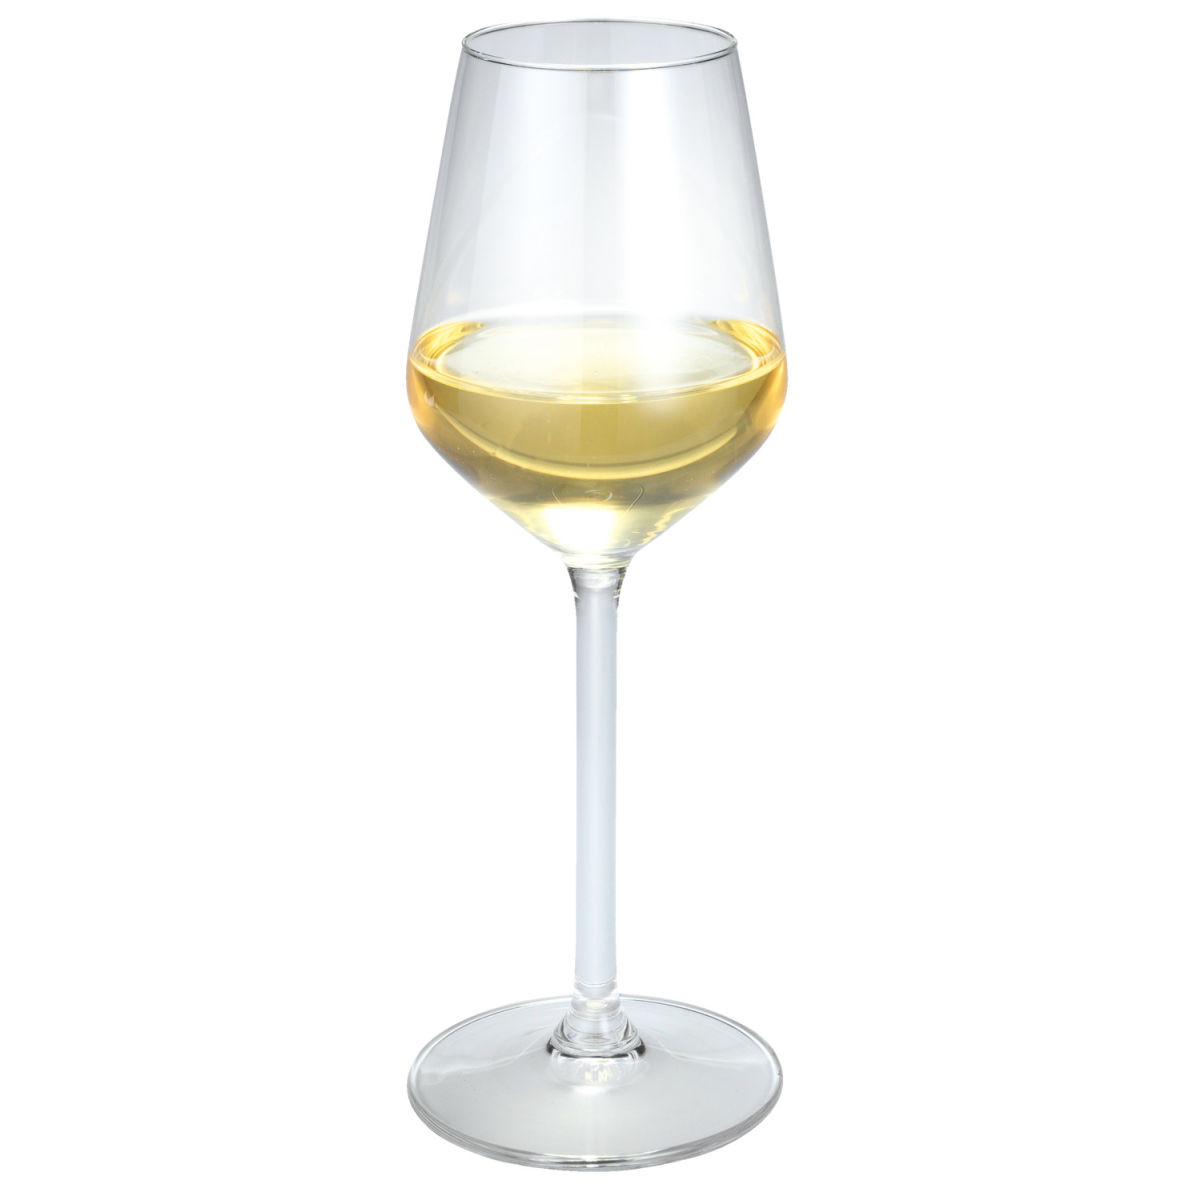 Royal leerdam Witte wijnglas Carré zonder vulstreepje; 290ml, 5.5x20.7 cm (ØxH); transparant; 6 stuk / verpakking